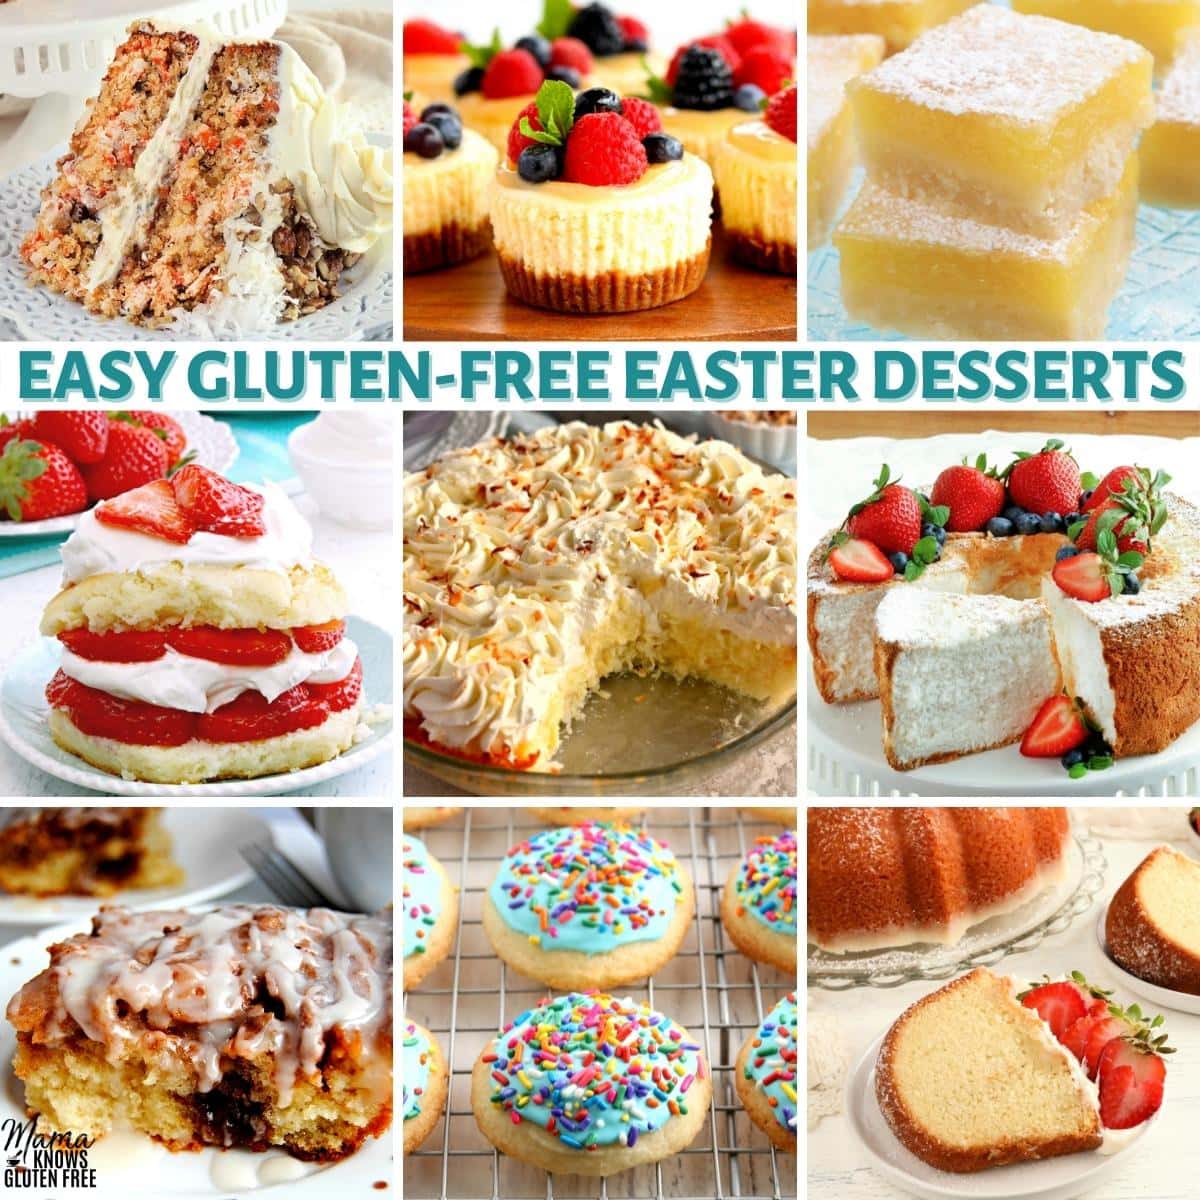 gluten-free Easter desserts photo collage